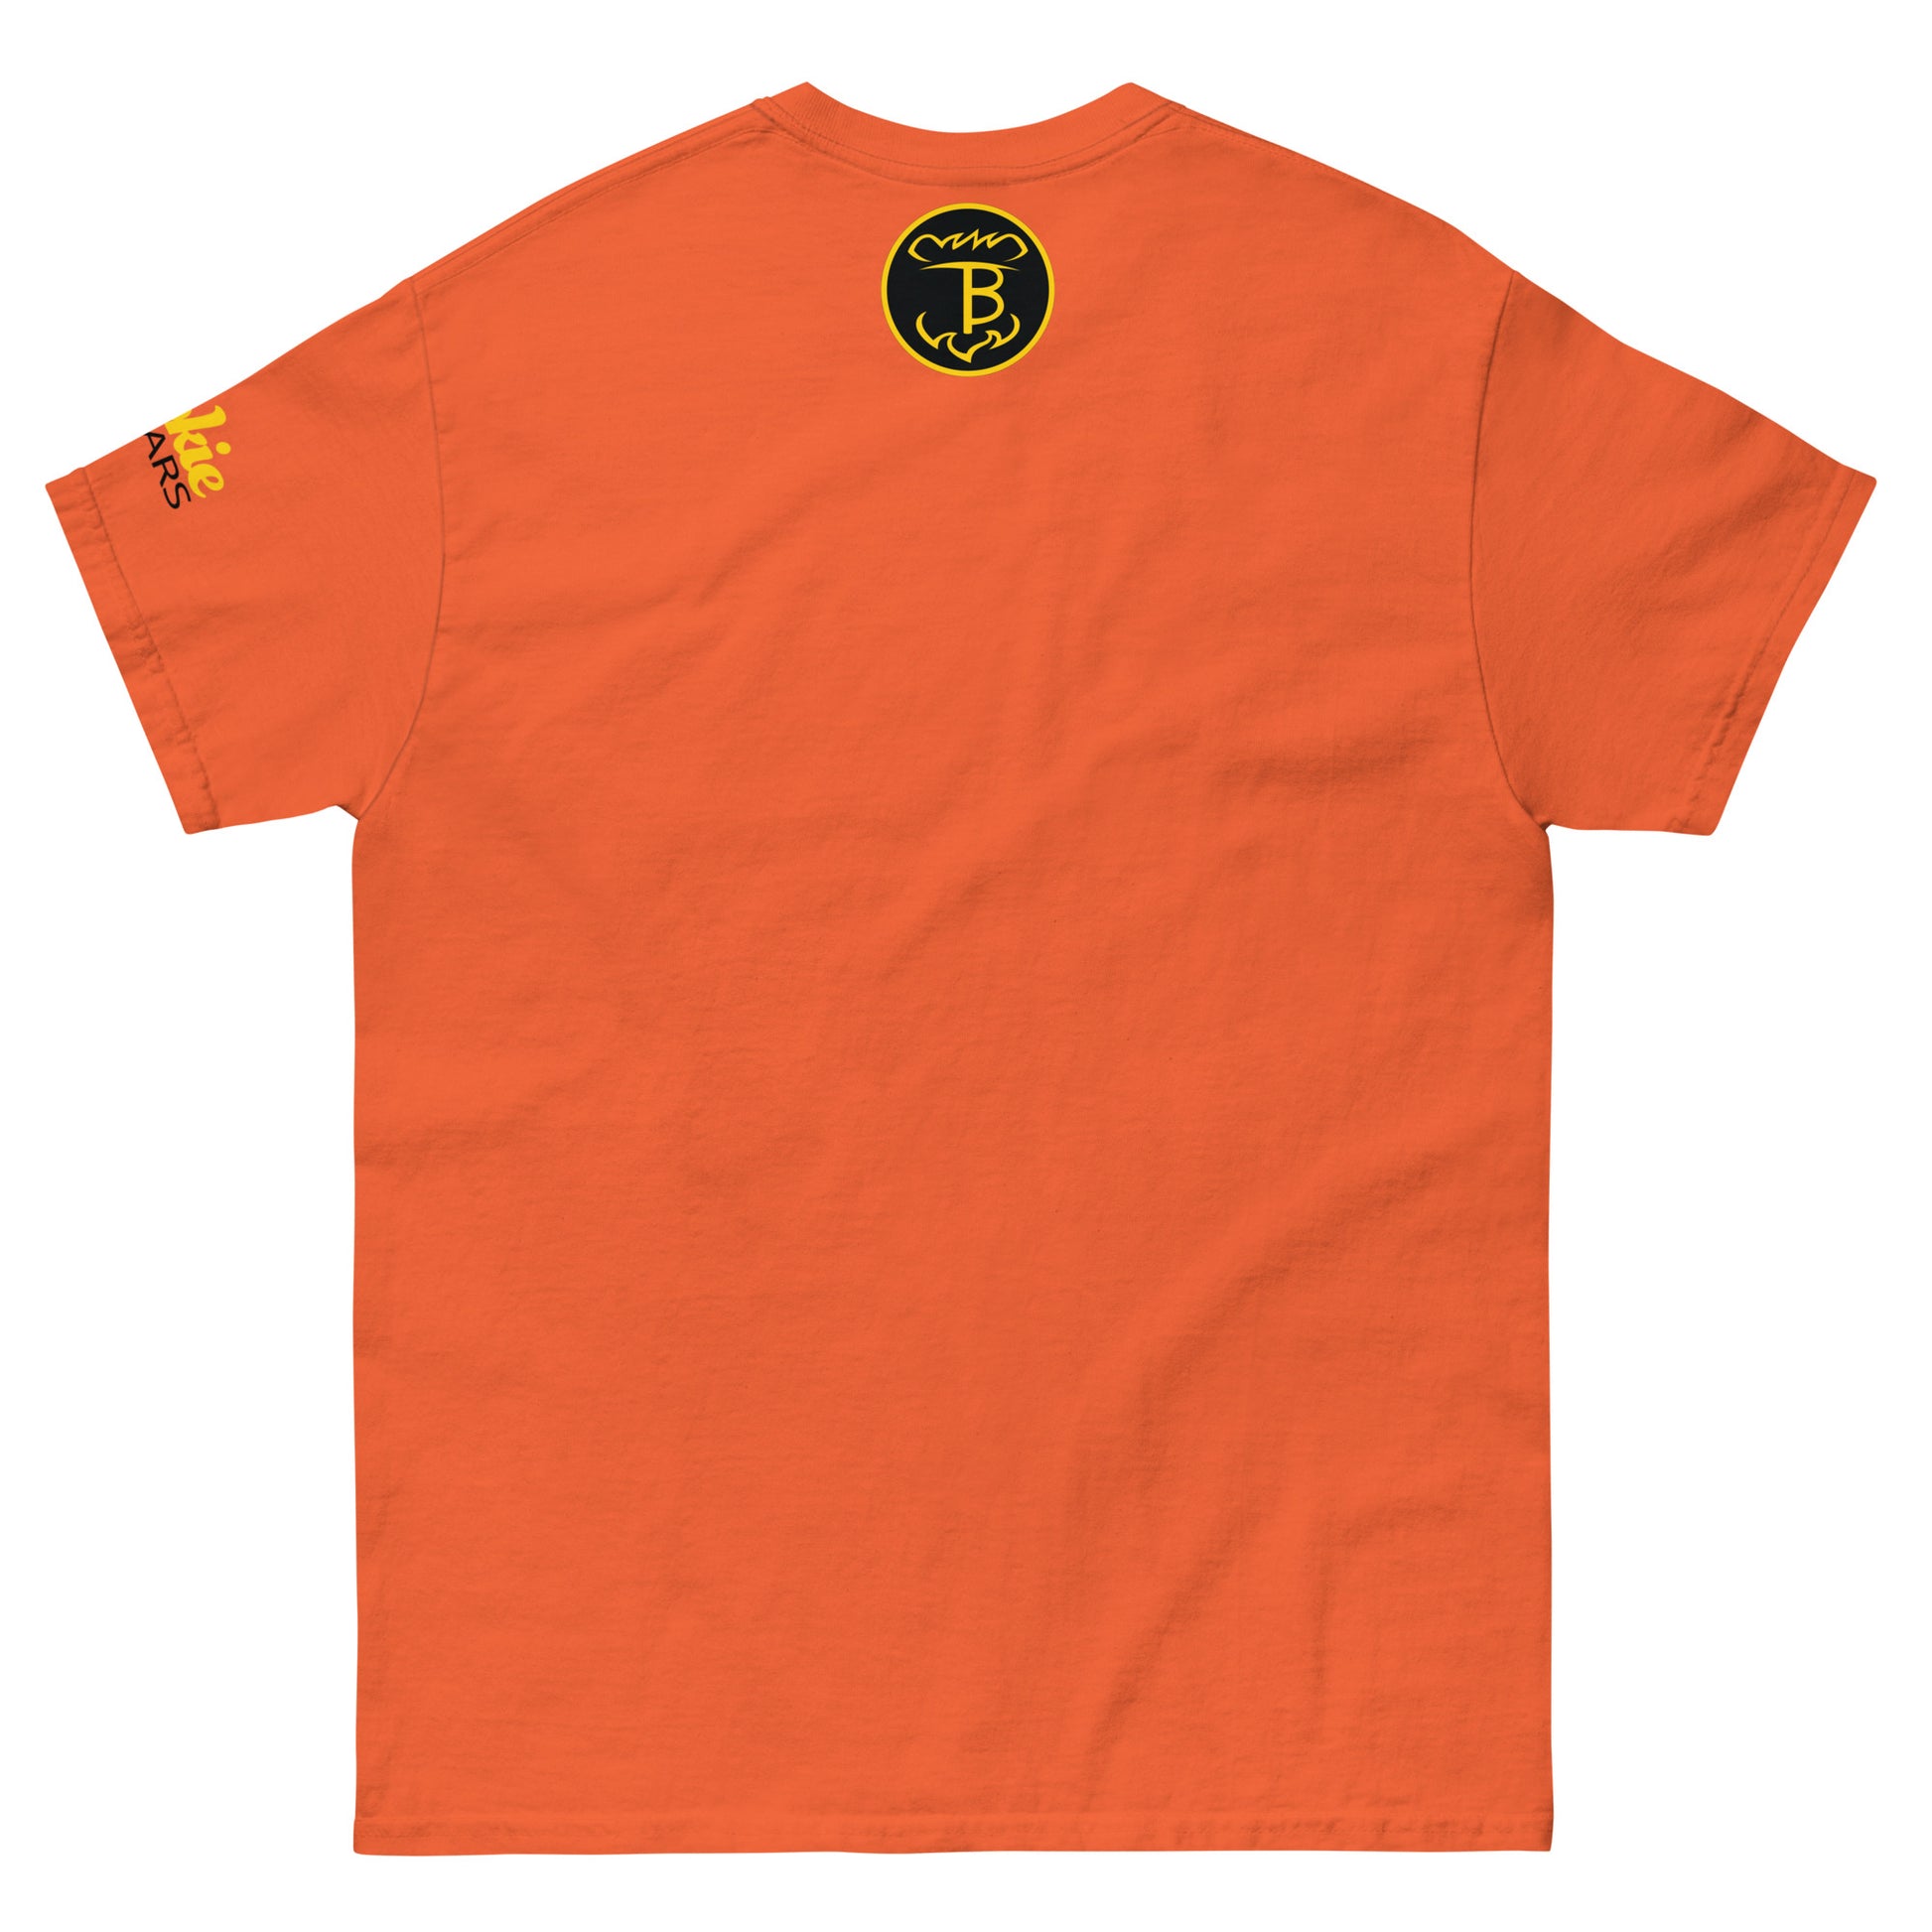 Rollin' Up the Agent orange T-shirt Tokie Bears